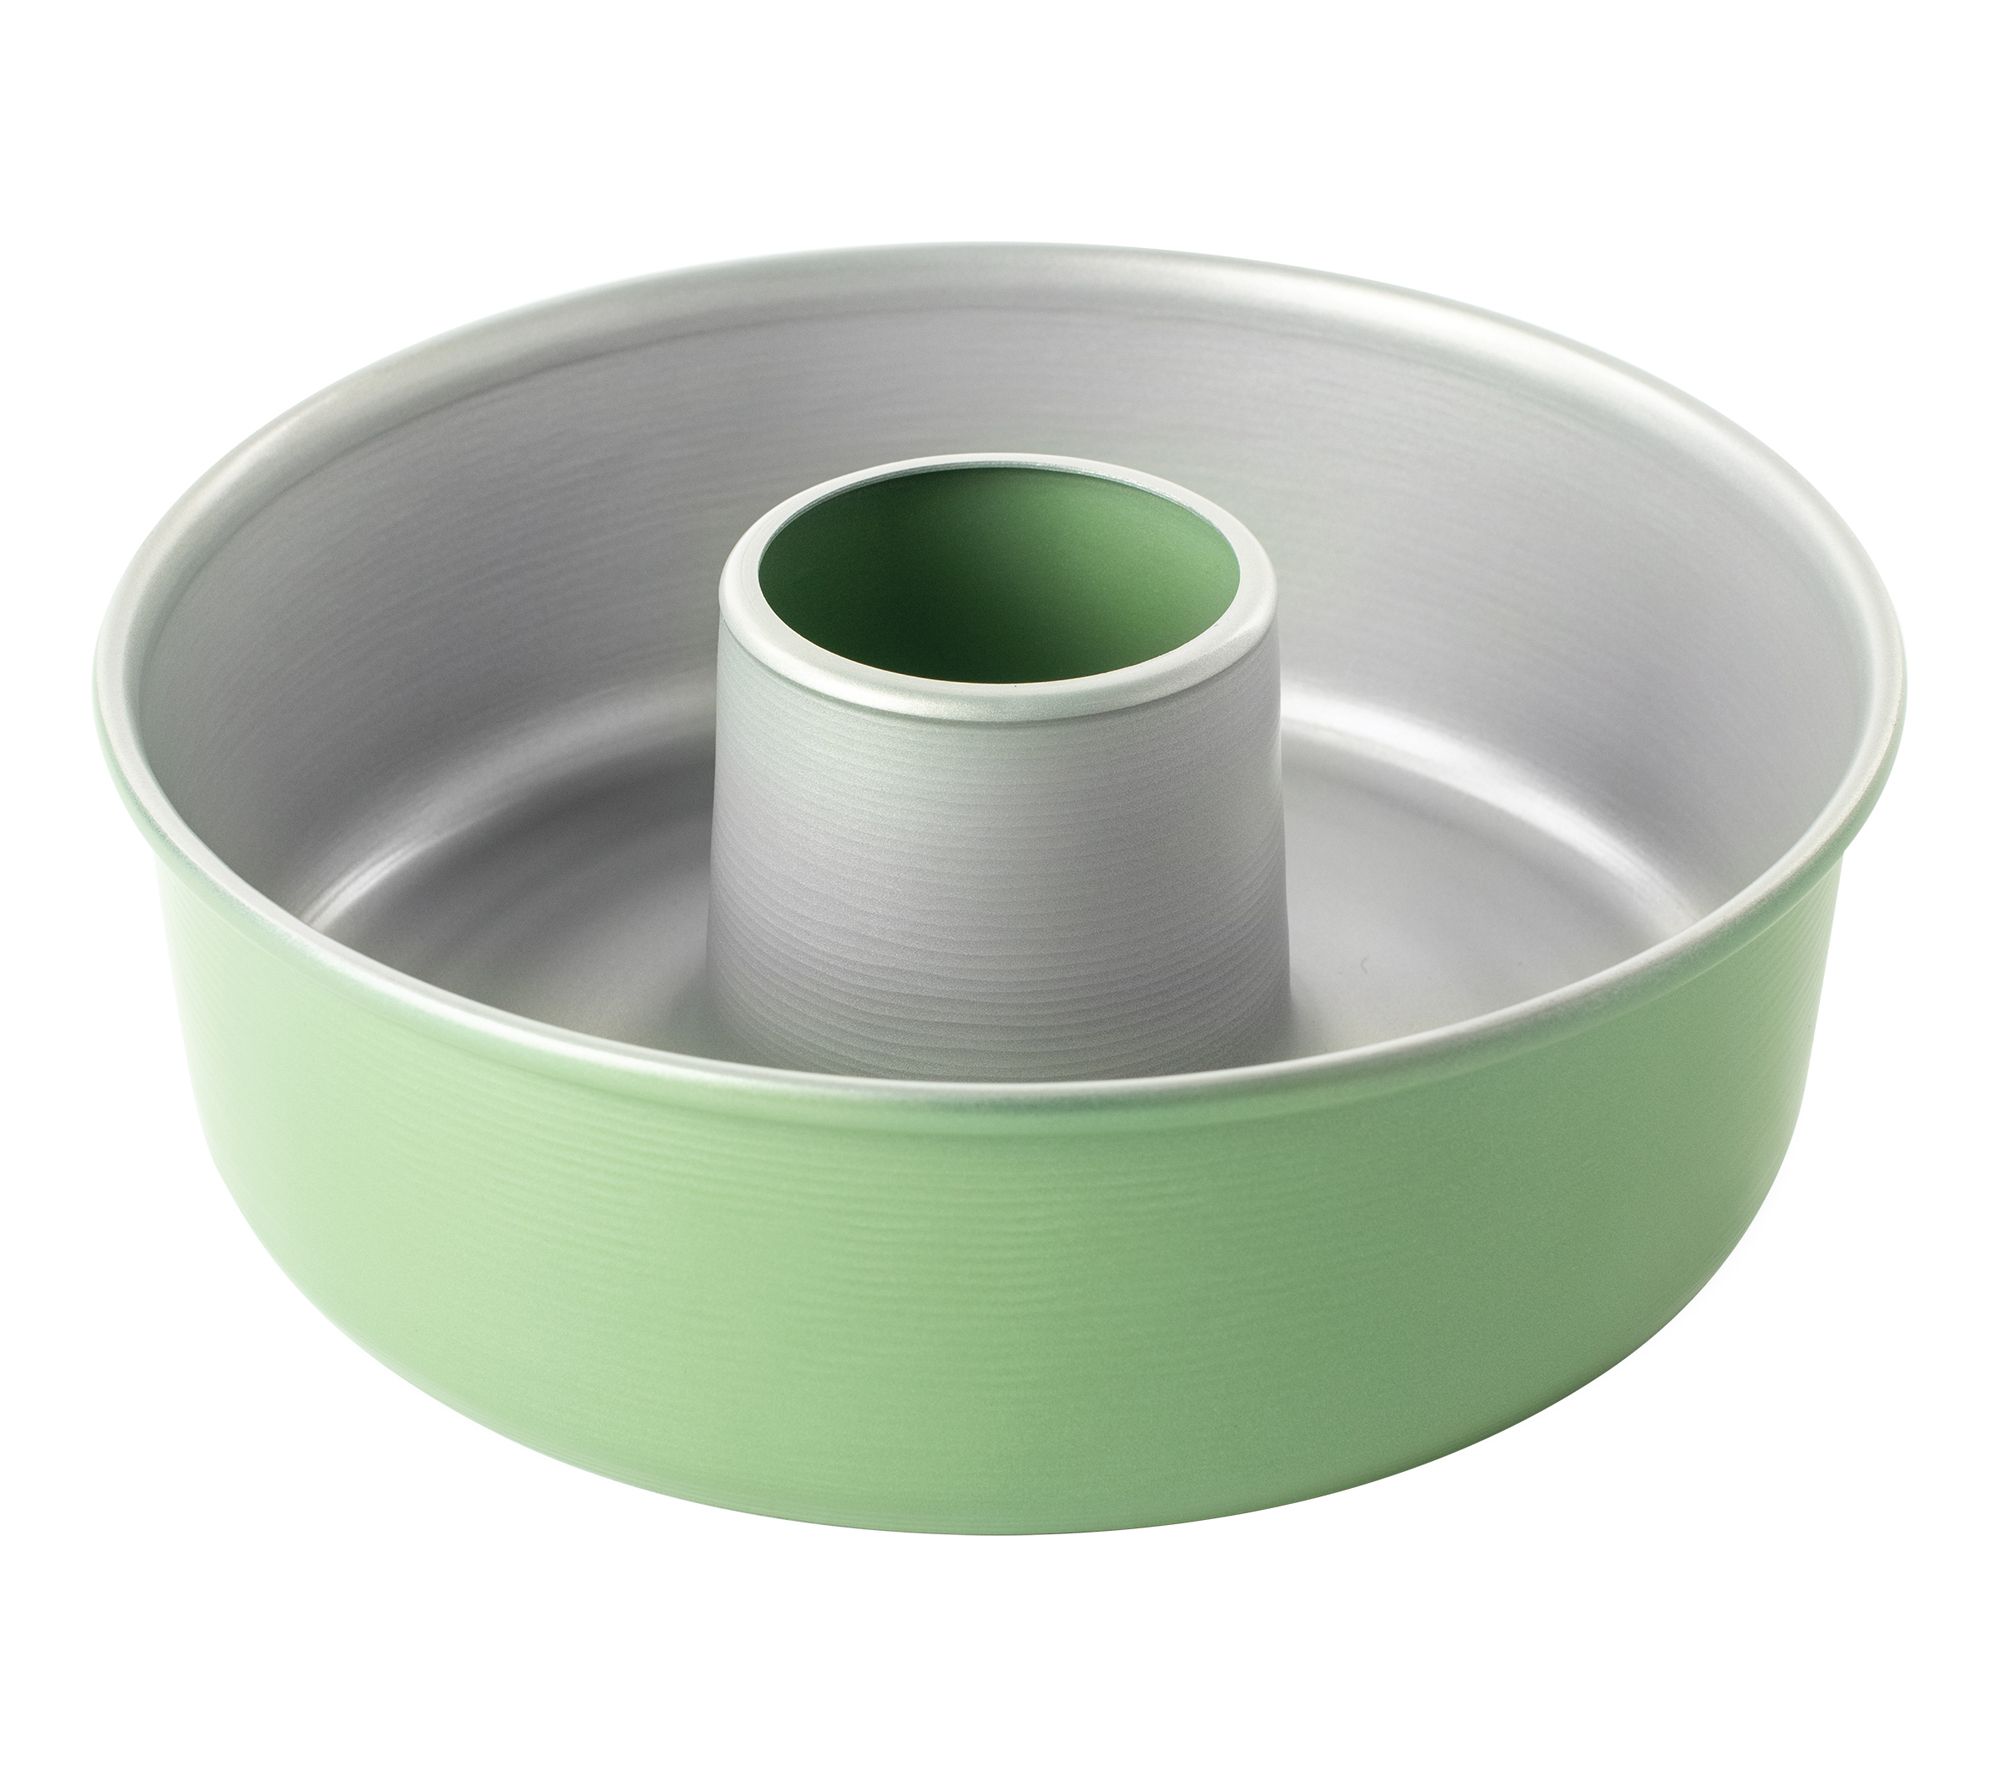  Nordic Ware Formed Bundt Pan, 6-Cup, Navy: Home & Kitchen